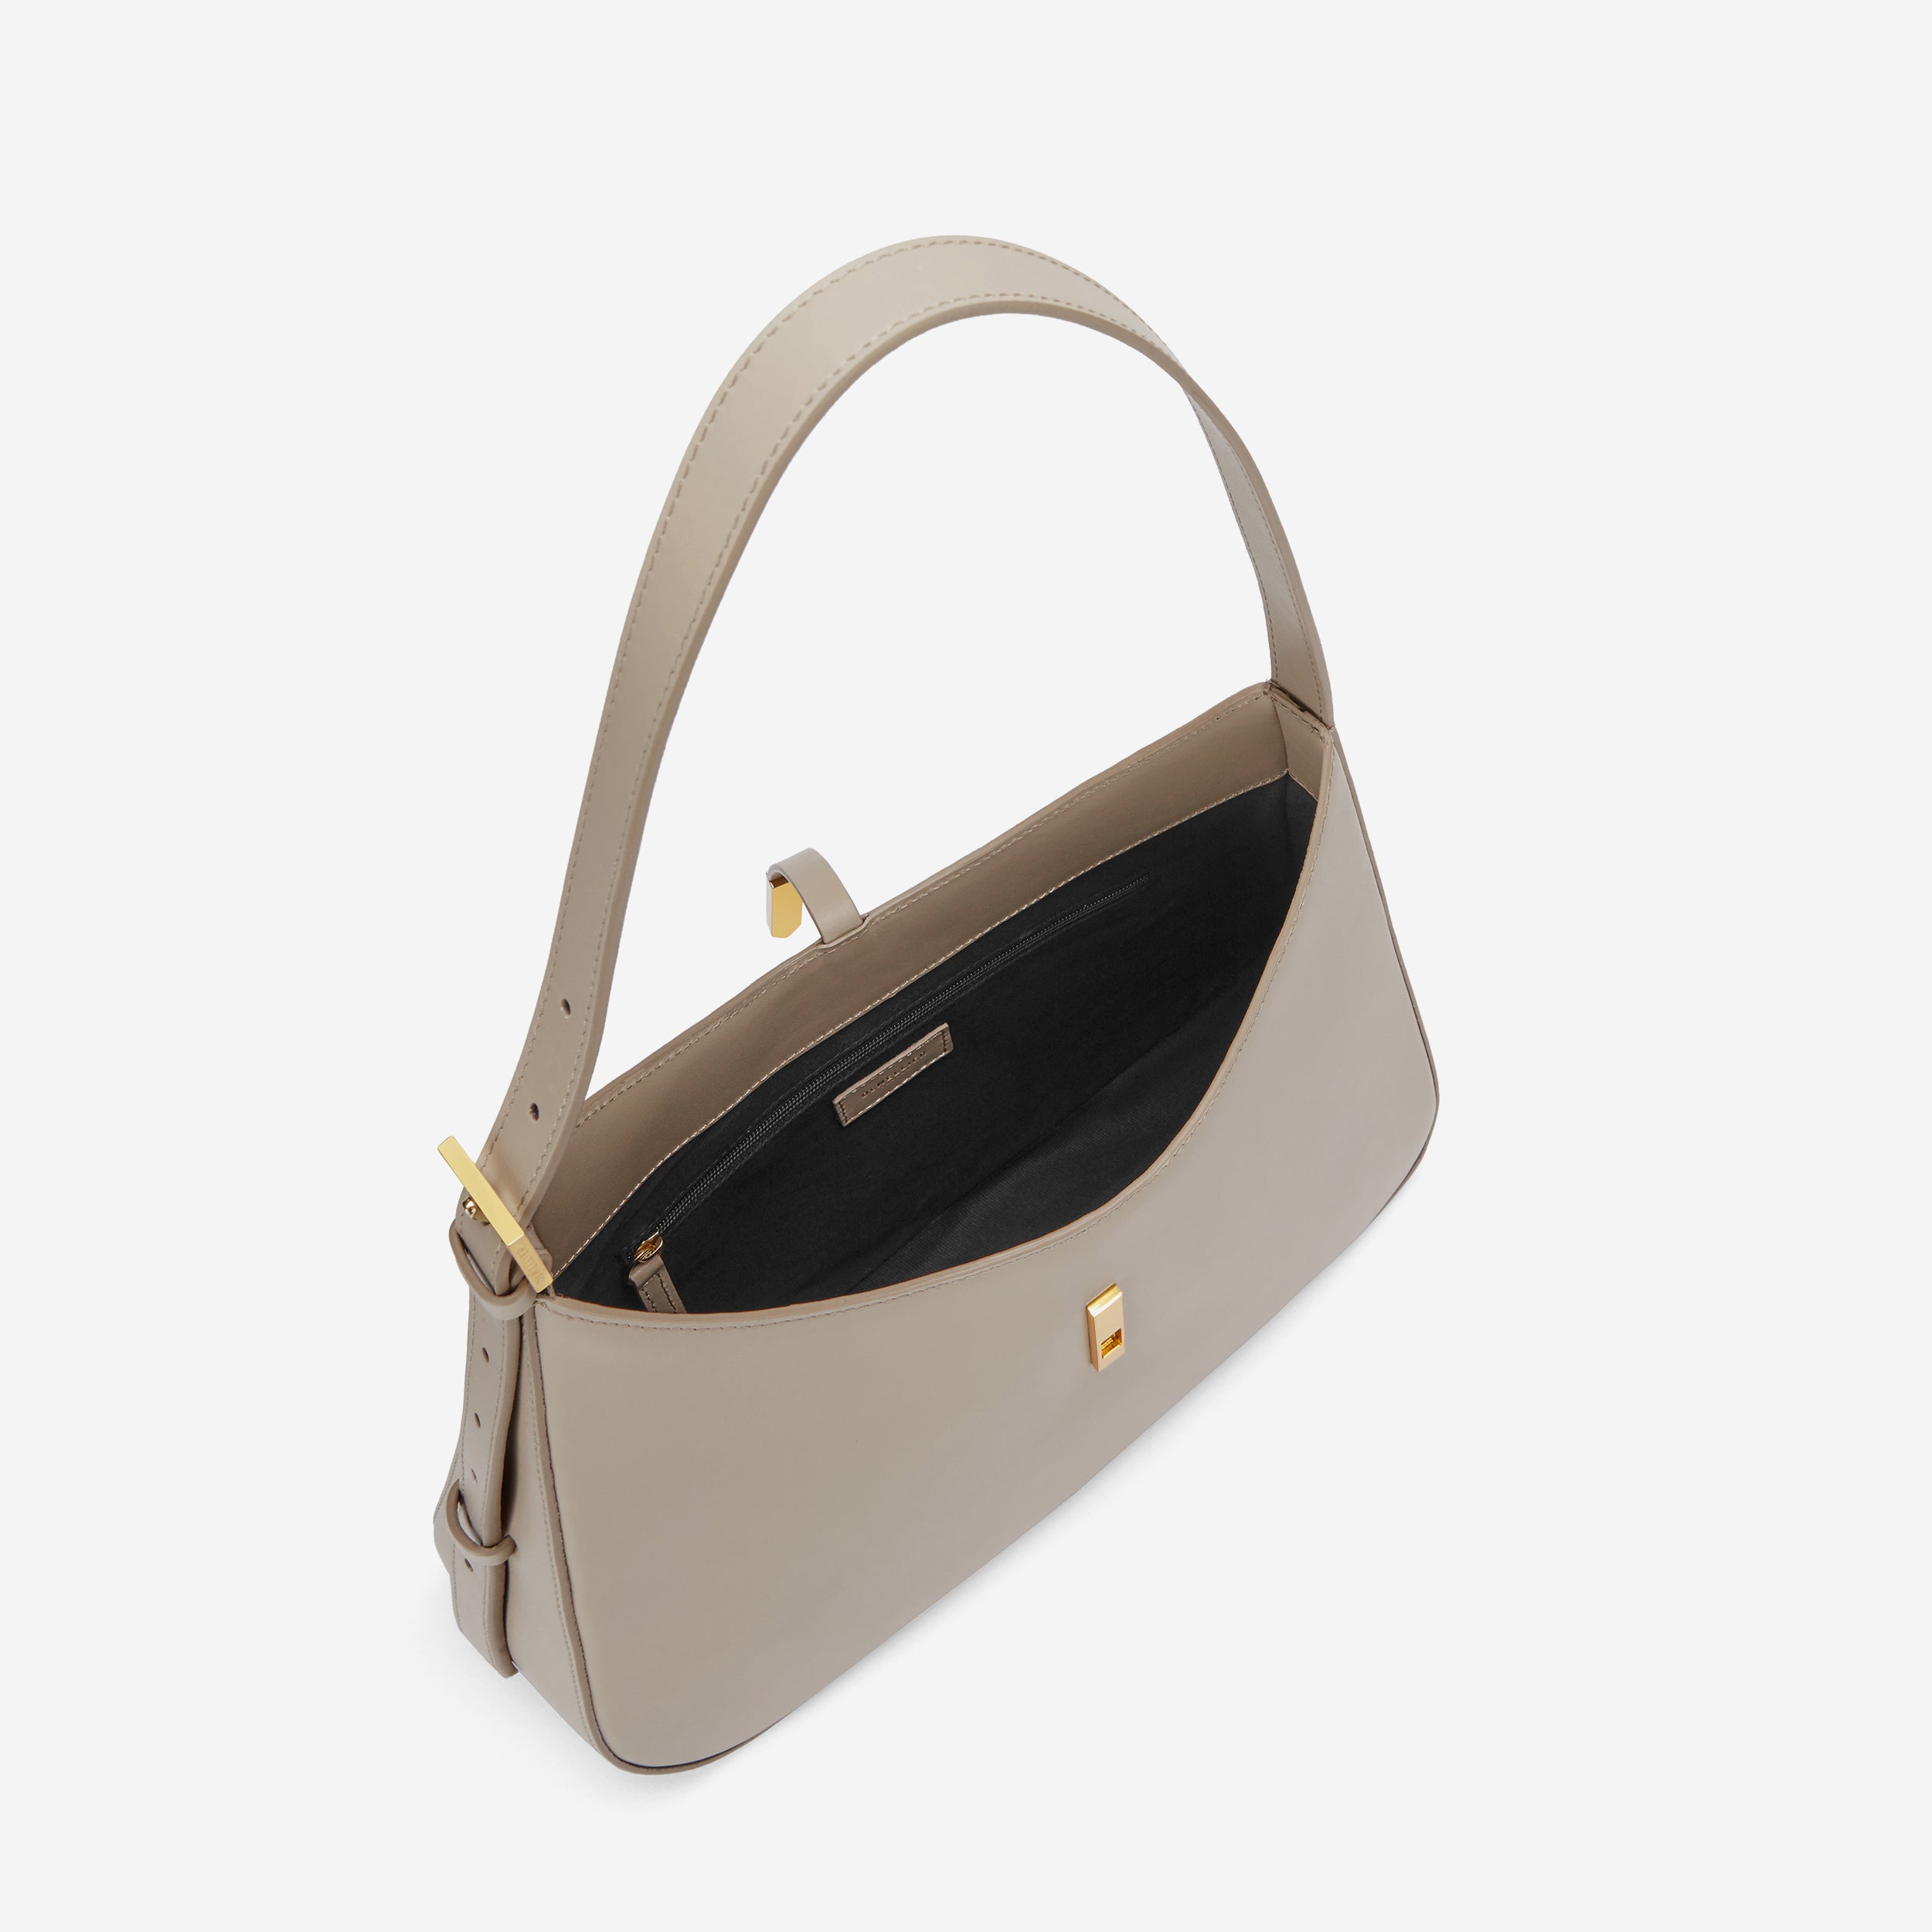 MACY'S Pink faux leather tote light tan shopper bag handbag taupe purse NEW  | eBay